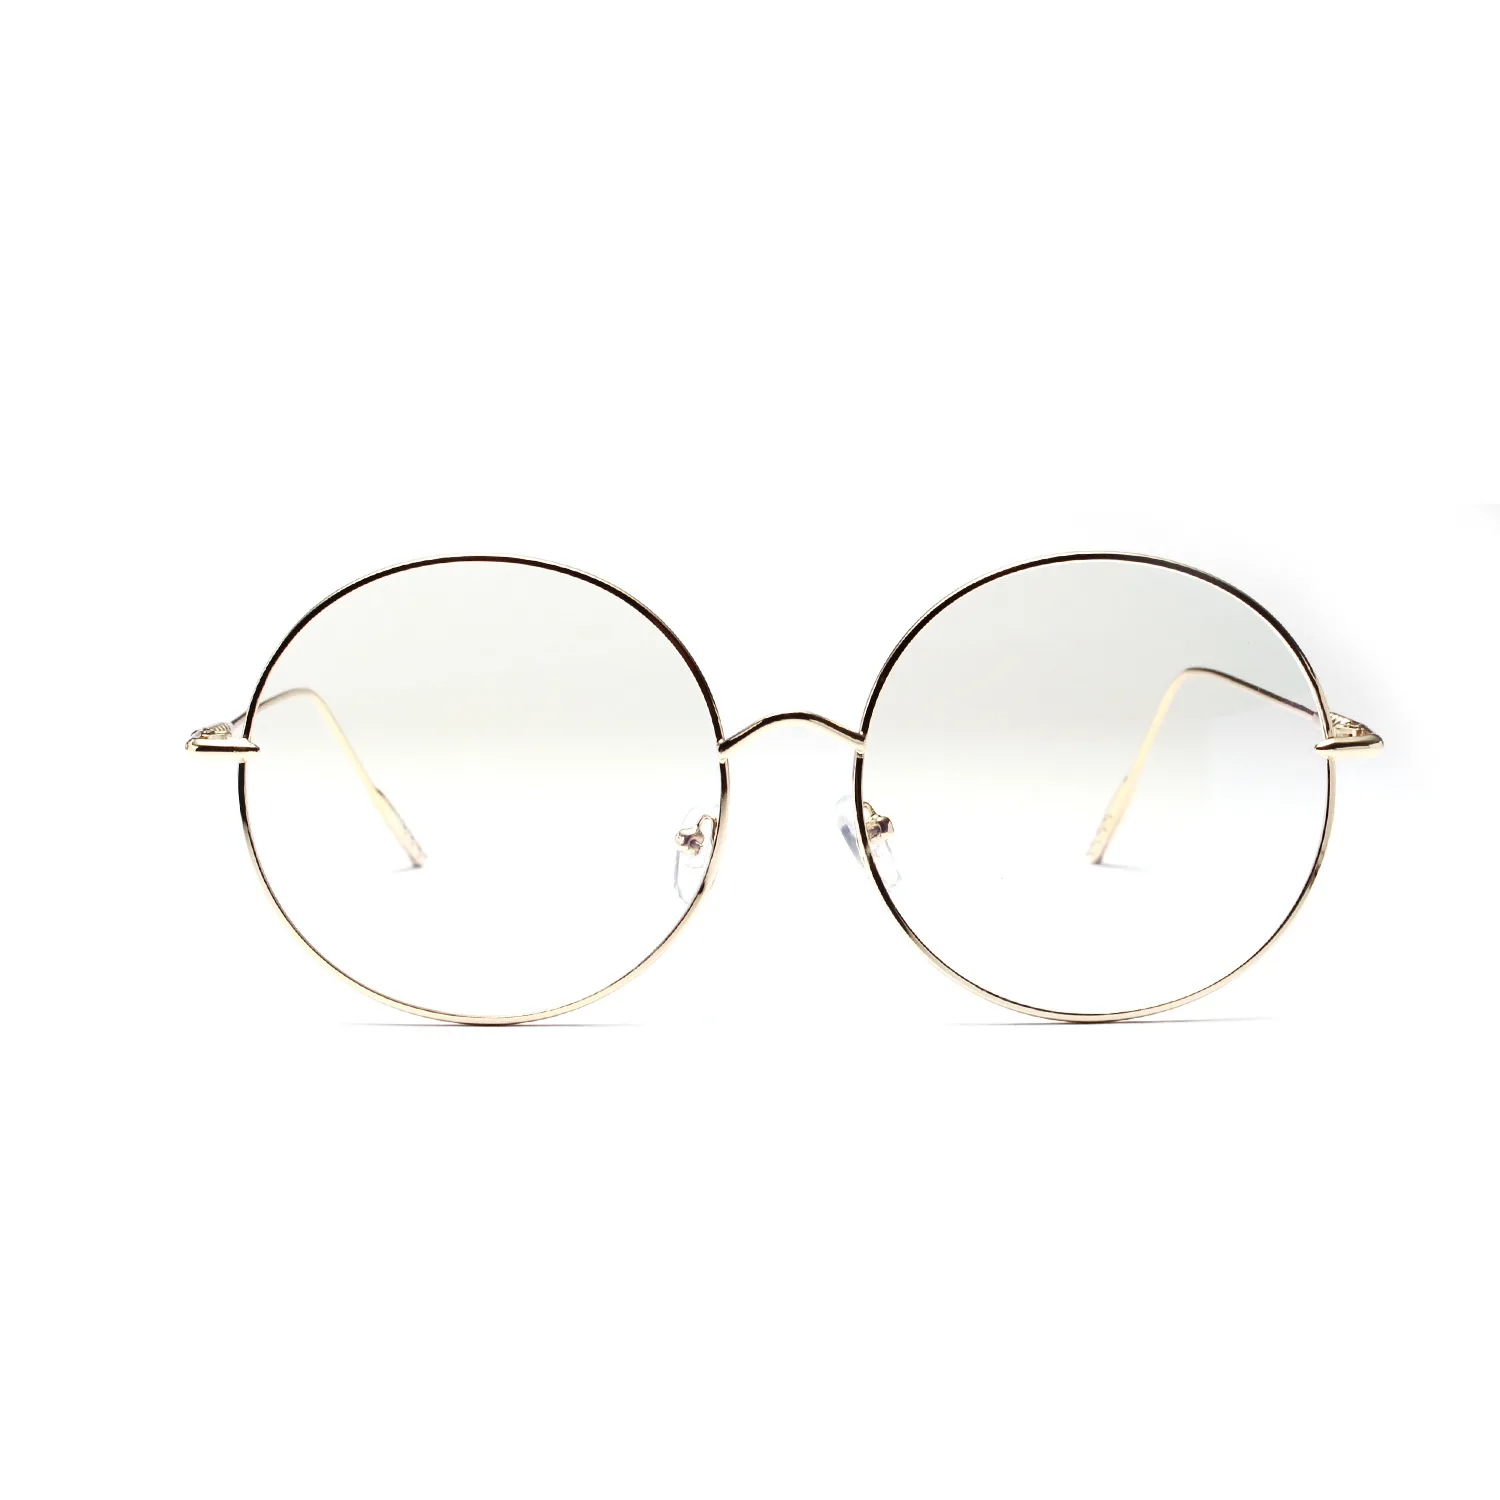 Cadru metalic rotund plat ochelari de sex feminin subțire cadru decorativ ochelari pentru bărbați și femei uv400